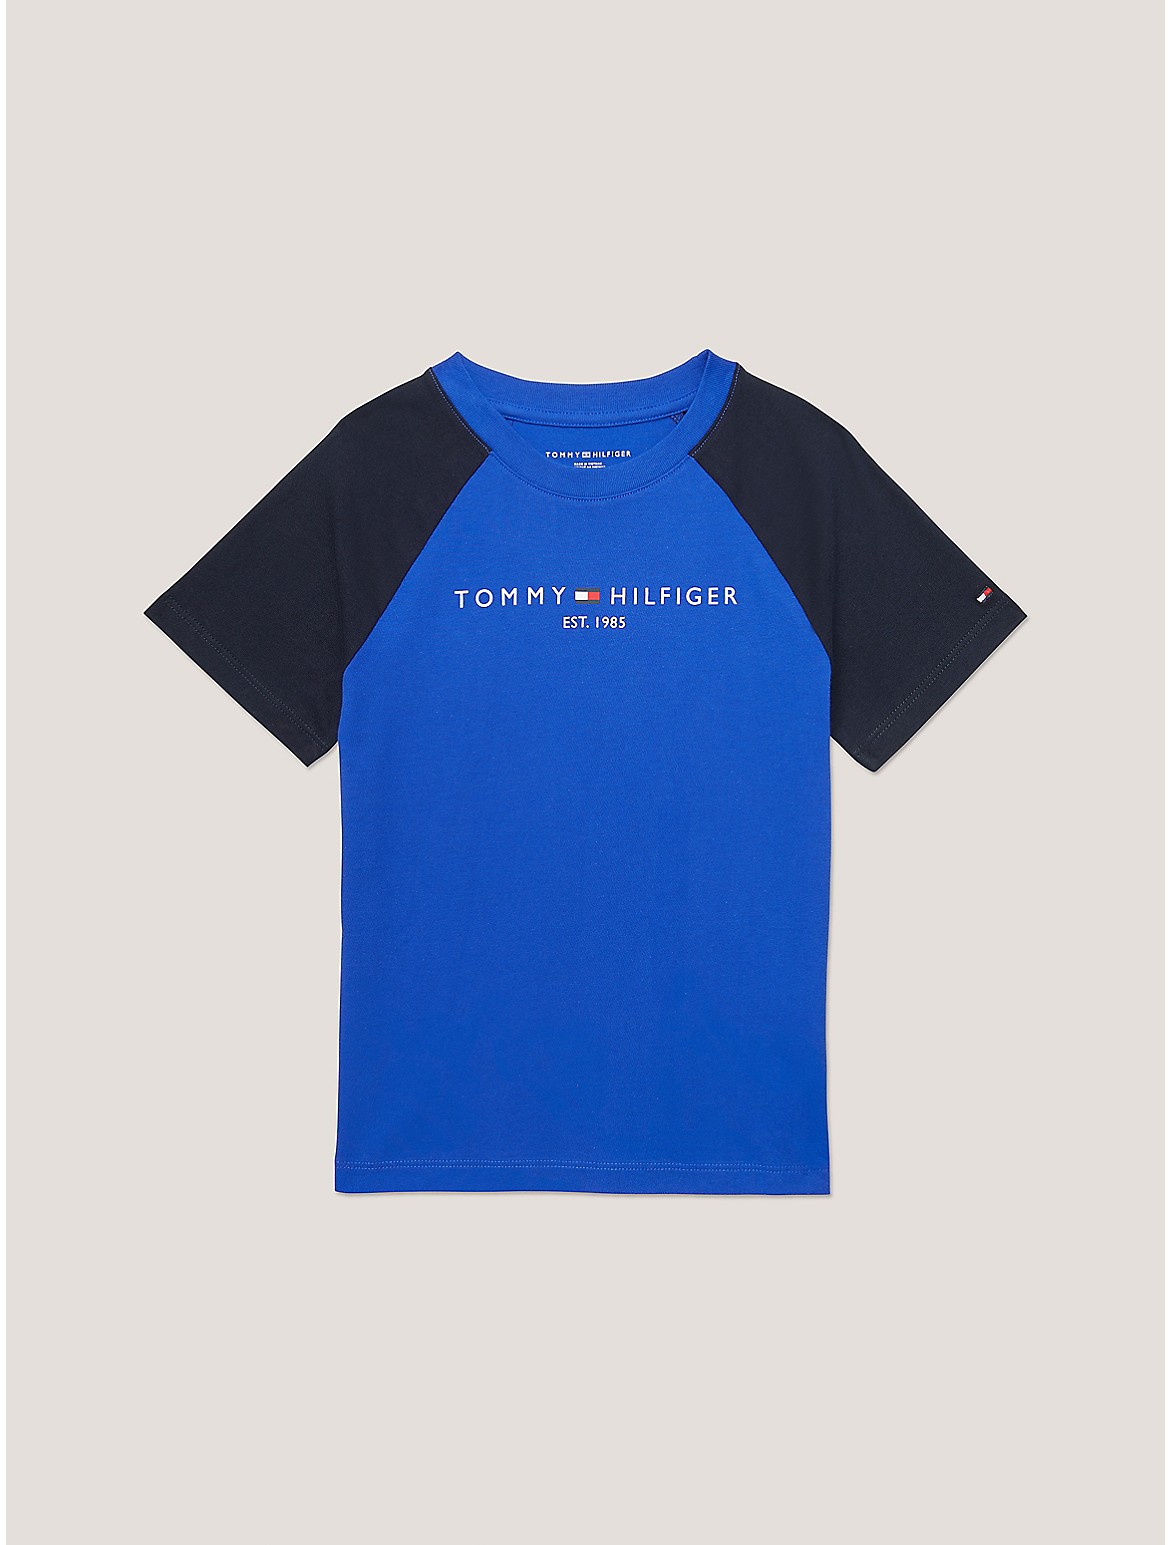 Tommy Hilfiger Boys' Kids' Baseball T-Shirt - Blue - XS